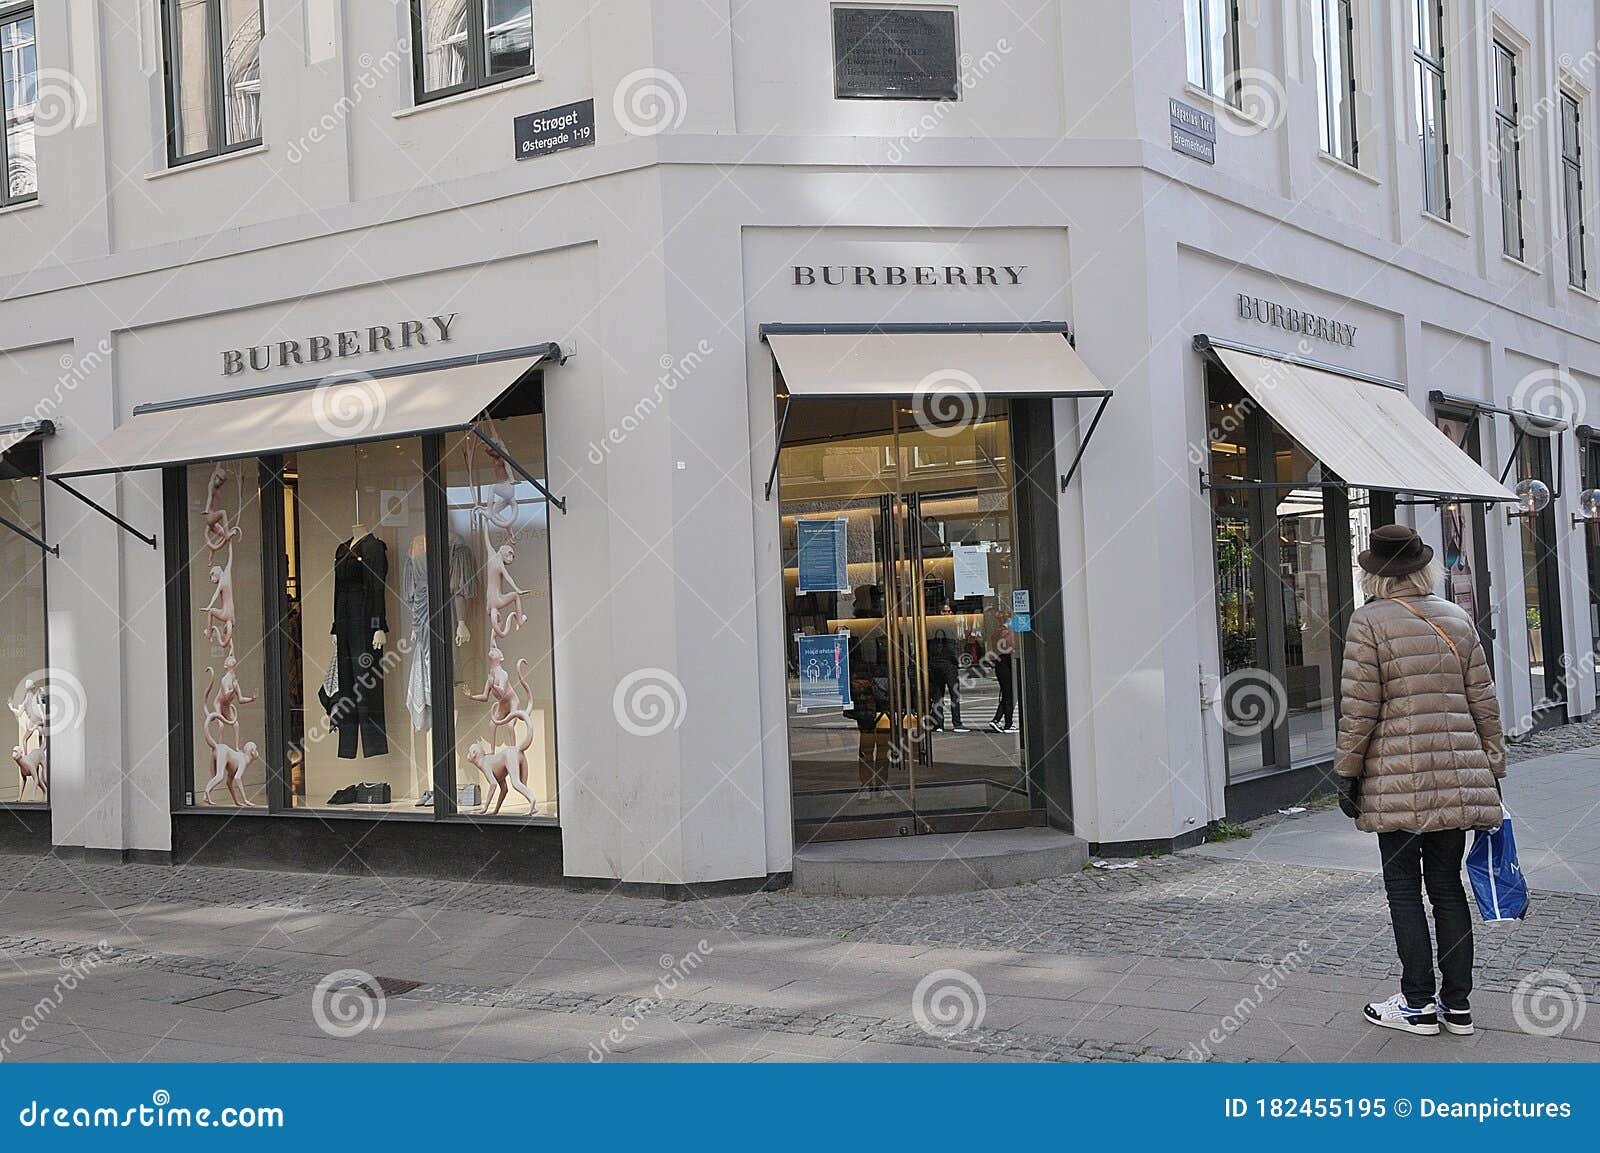 Burberry Shop Copenhagen Denmark Covid-19 Editorial Image Image of corona, land: 182455195